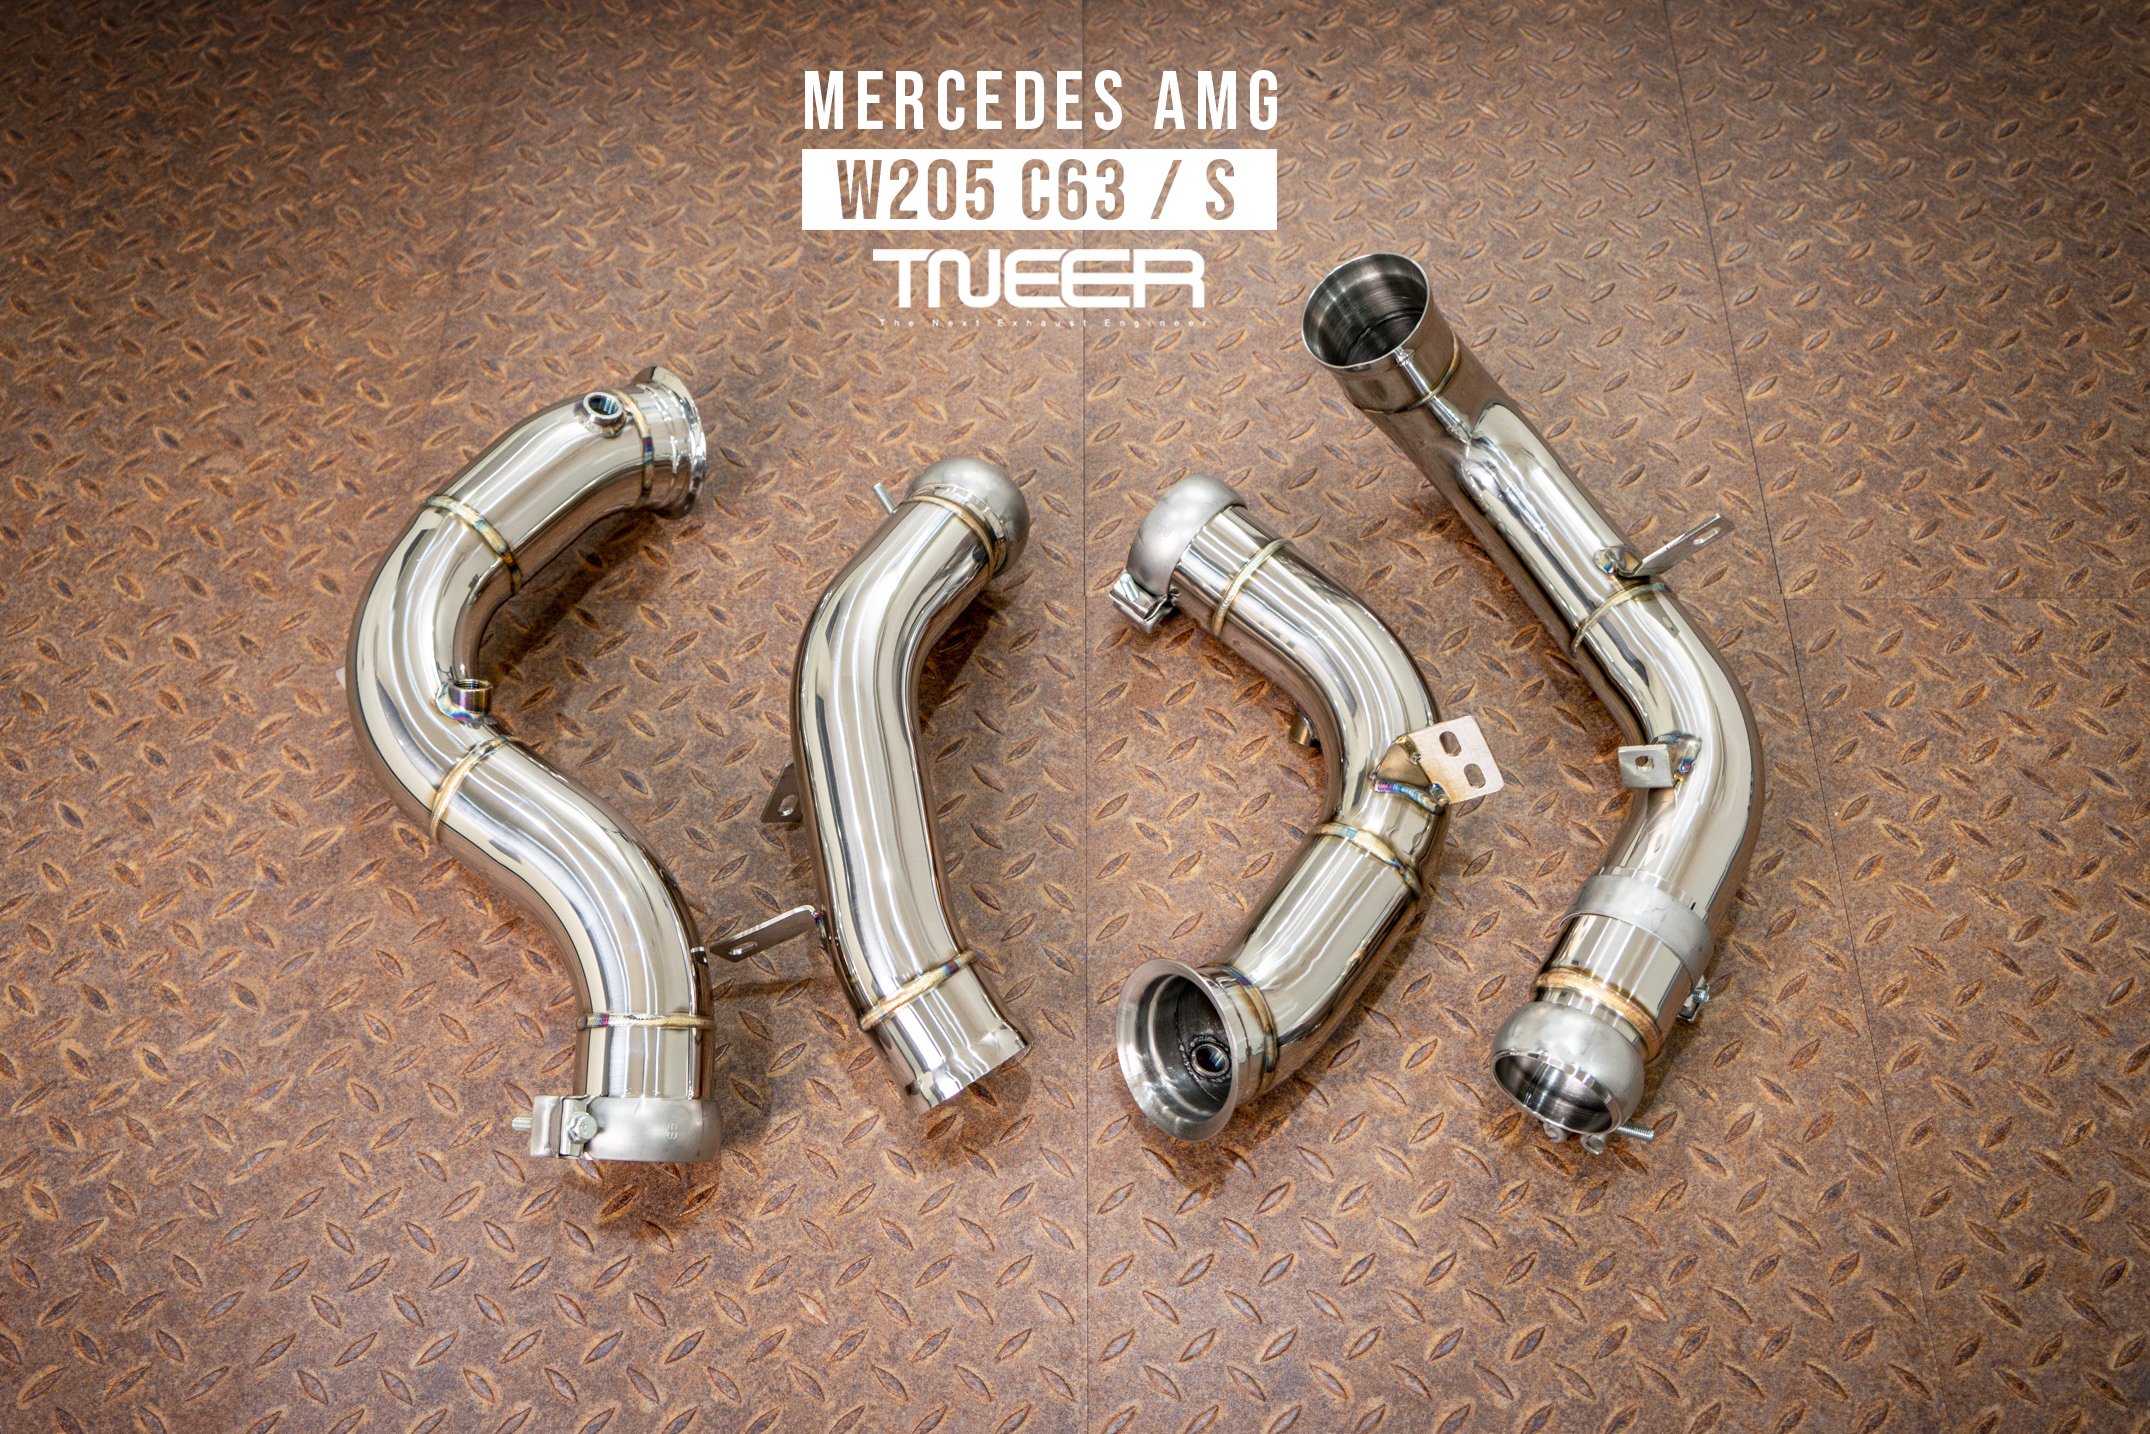 Mercedes-AMG W204 C63 TNEER High-Performance Downpipes